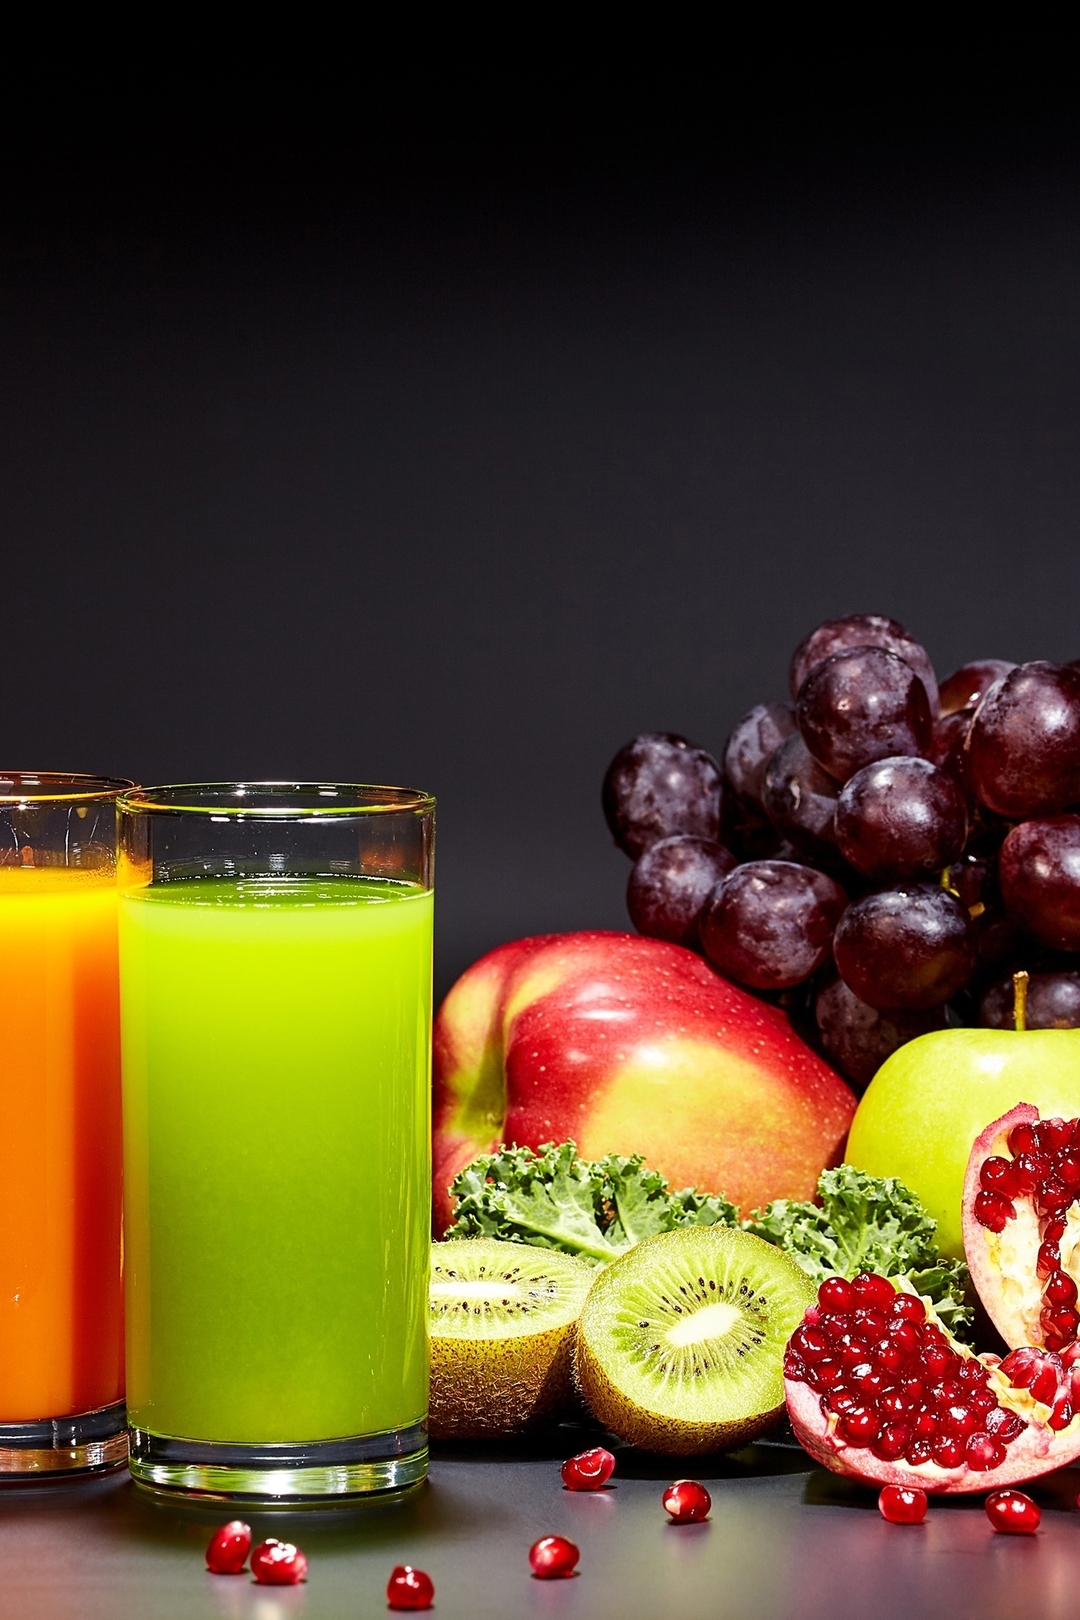 Картинка: Сок, напиток, фрукты, гранат, яблоки, киви, виноград, мята